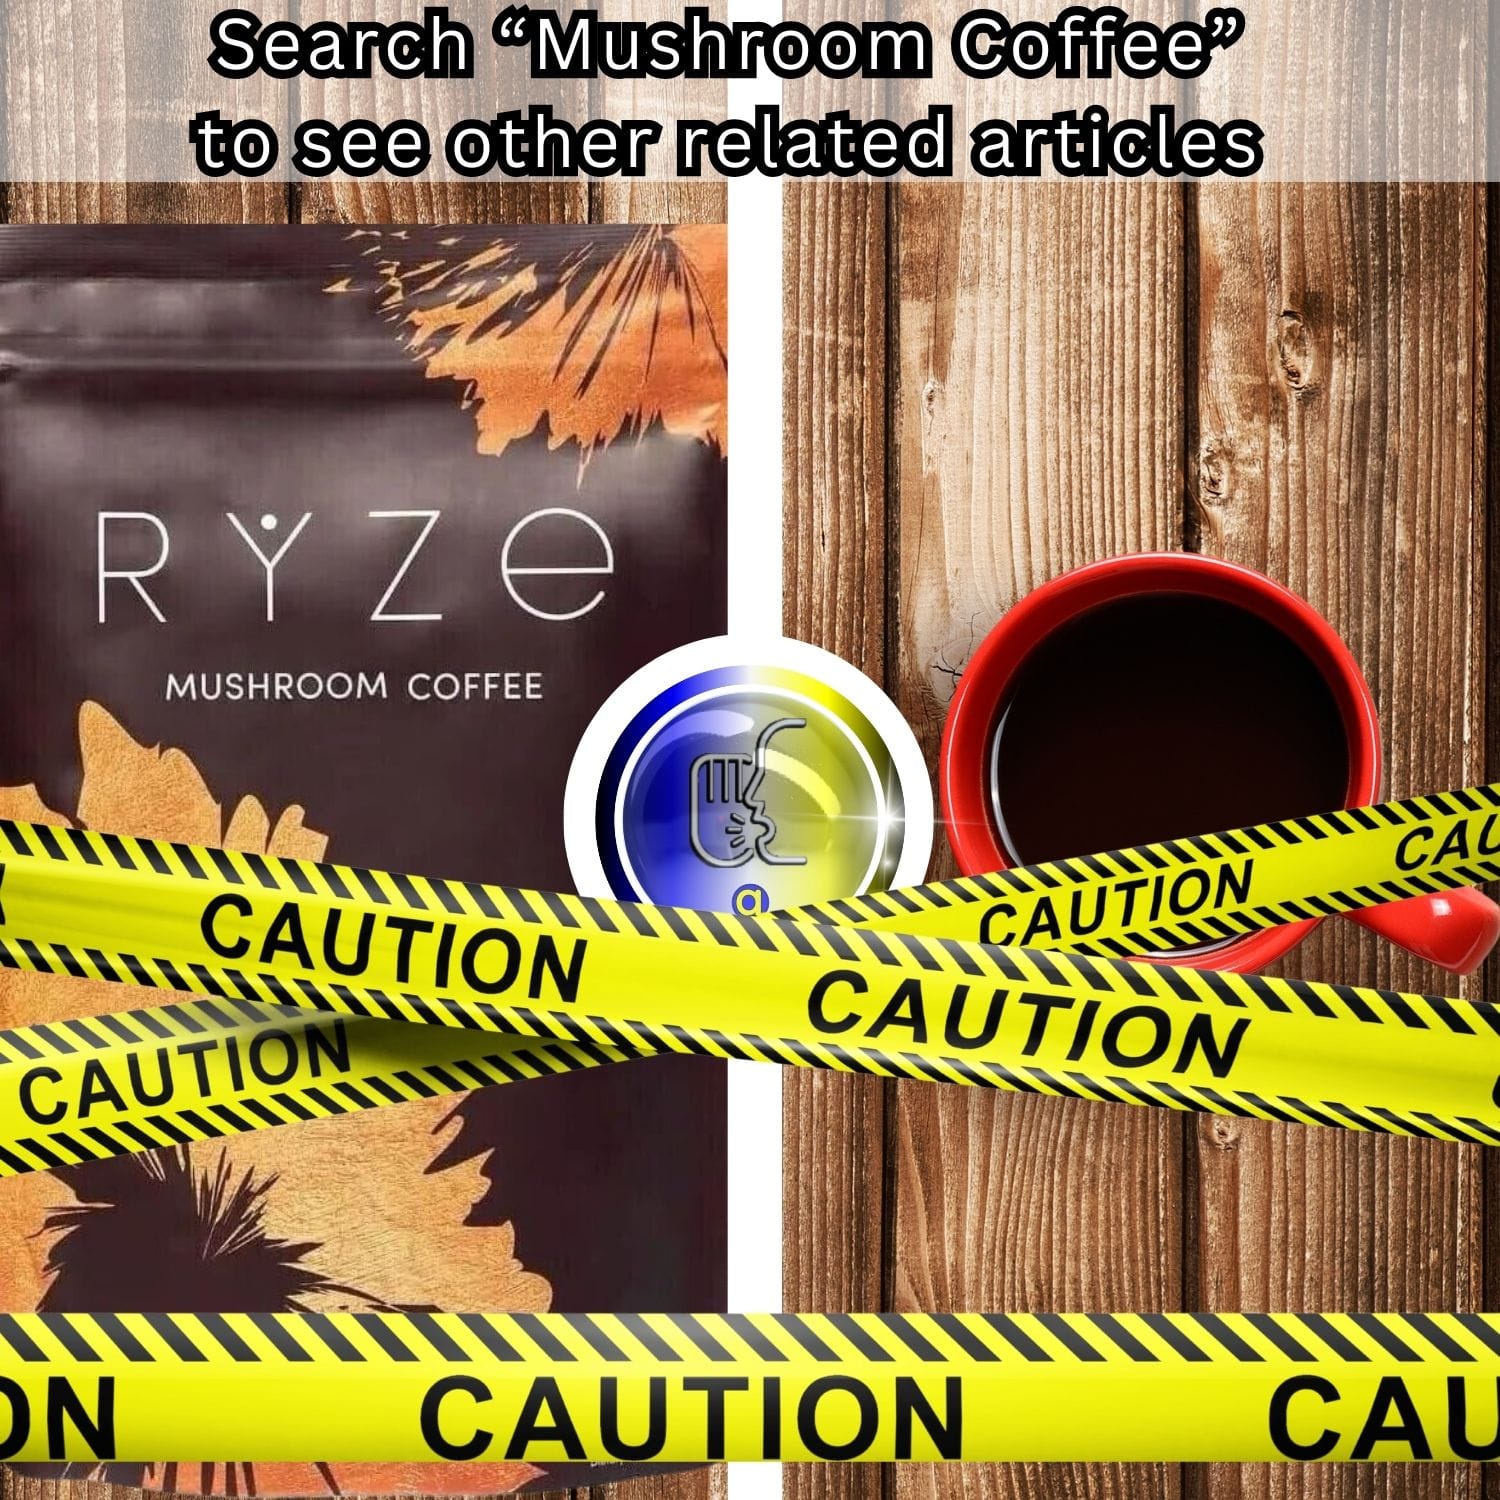 Who Should Not Drink Ryze Mushroom Coffee